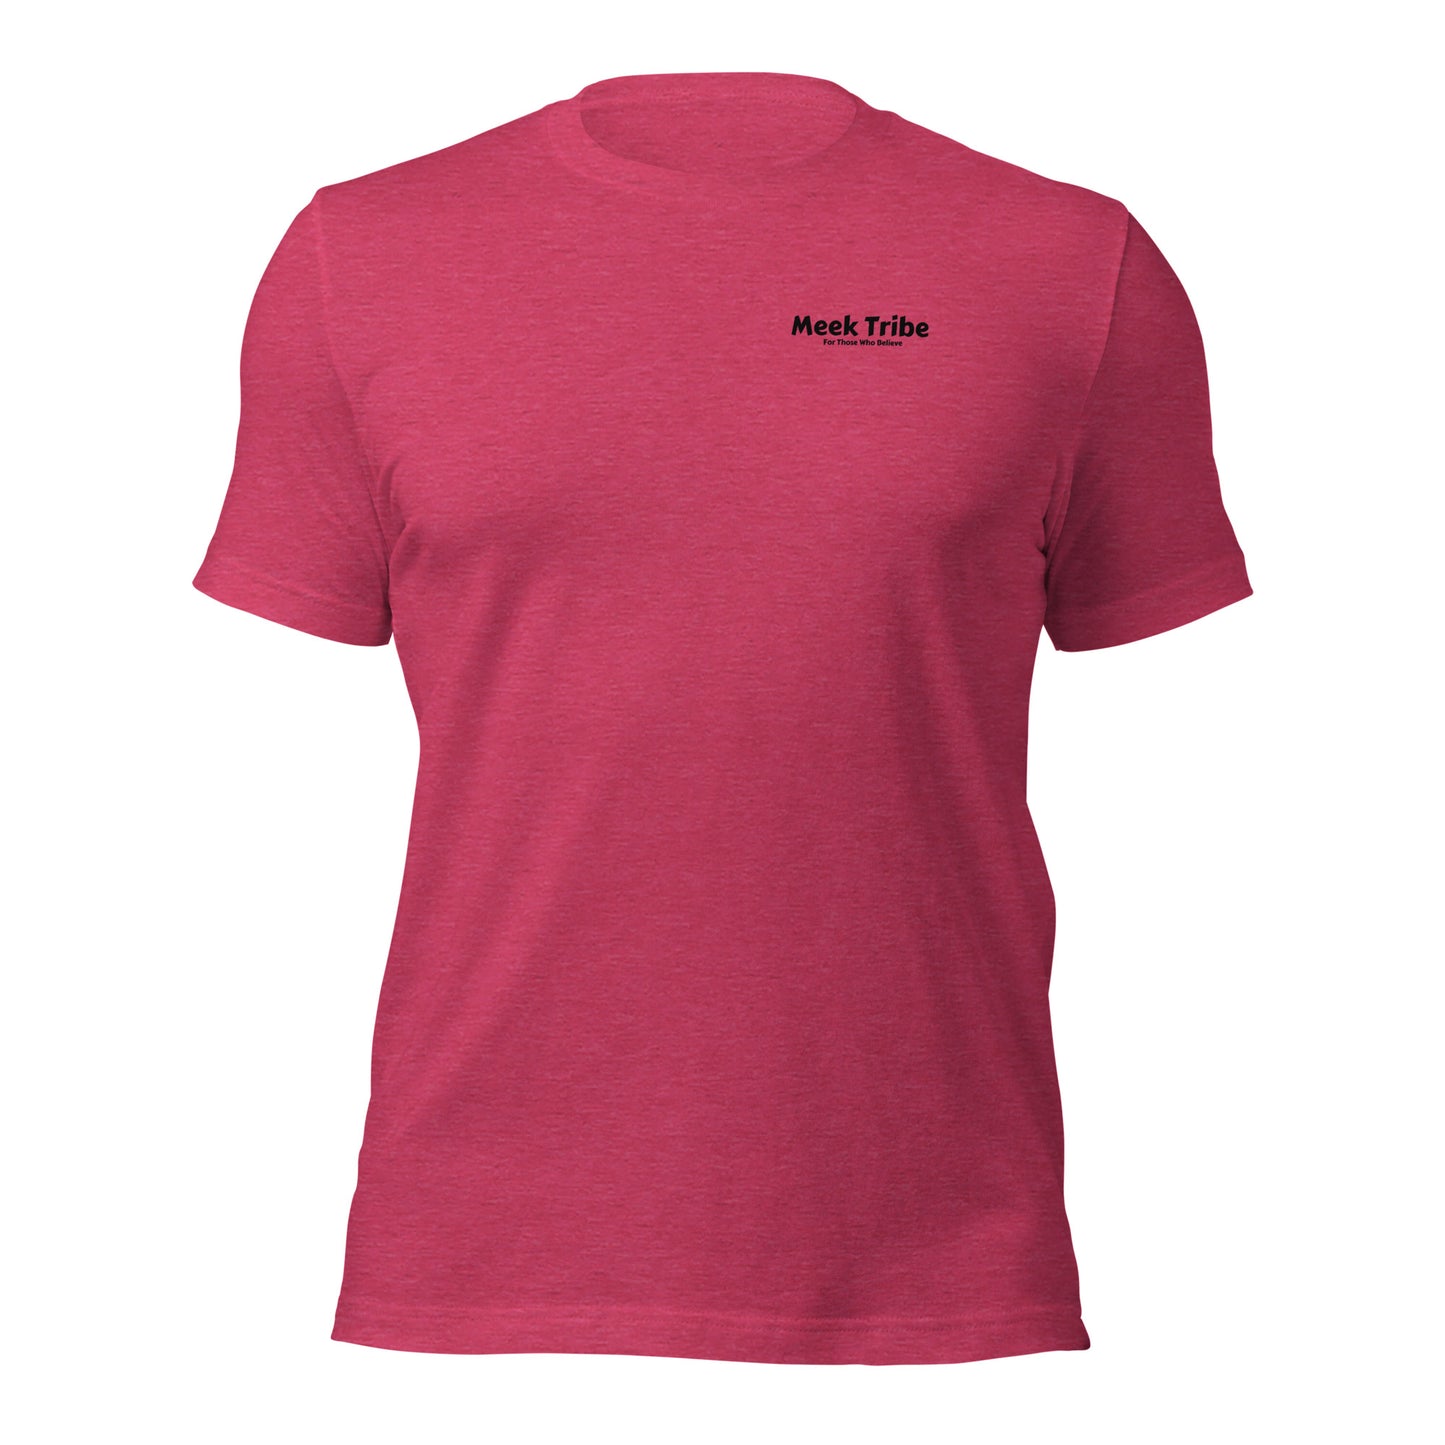 Meek Tribe "Made" Unisex T-Shirt